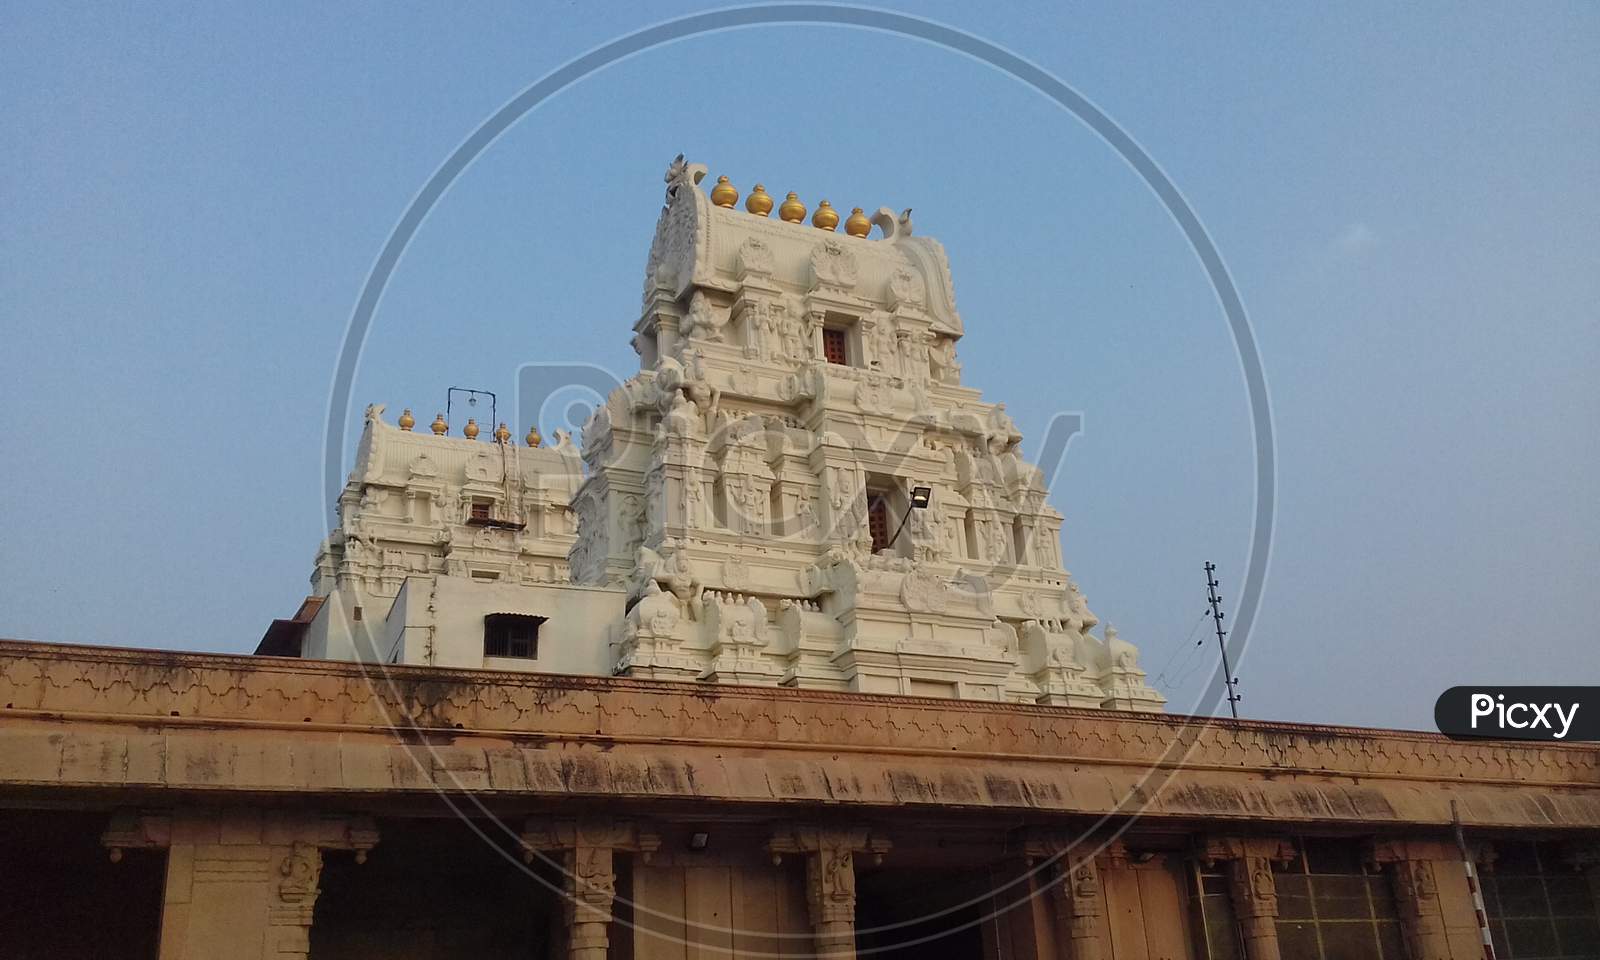 Shri Rang Nath Ji Temple, Vrindavan Ancient sri krisna balaram temple in Vrindavan wit golden pole. te temple design is sout indian type.